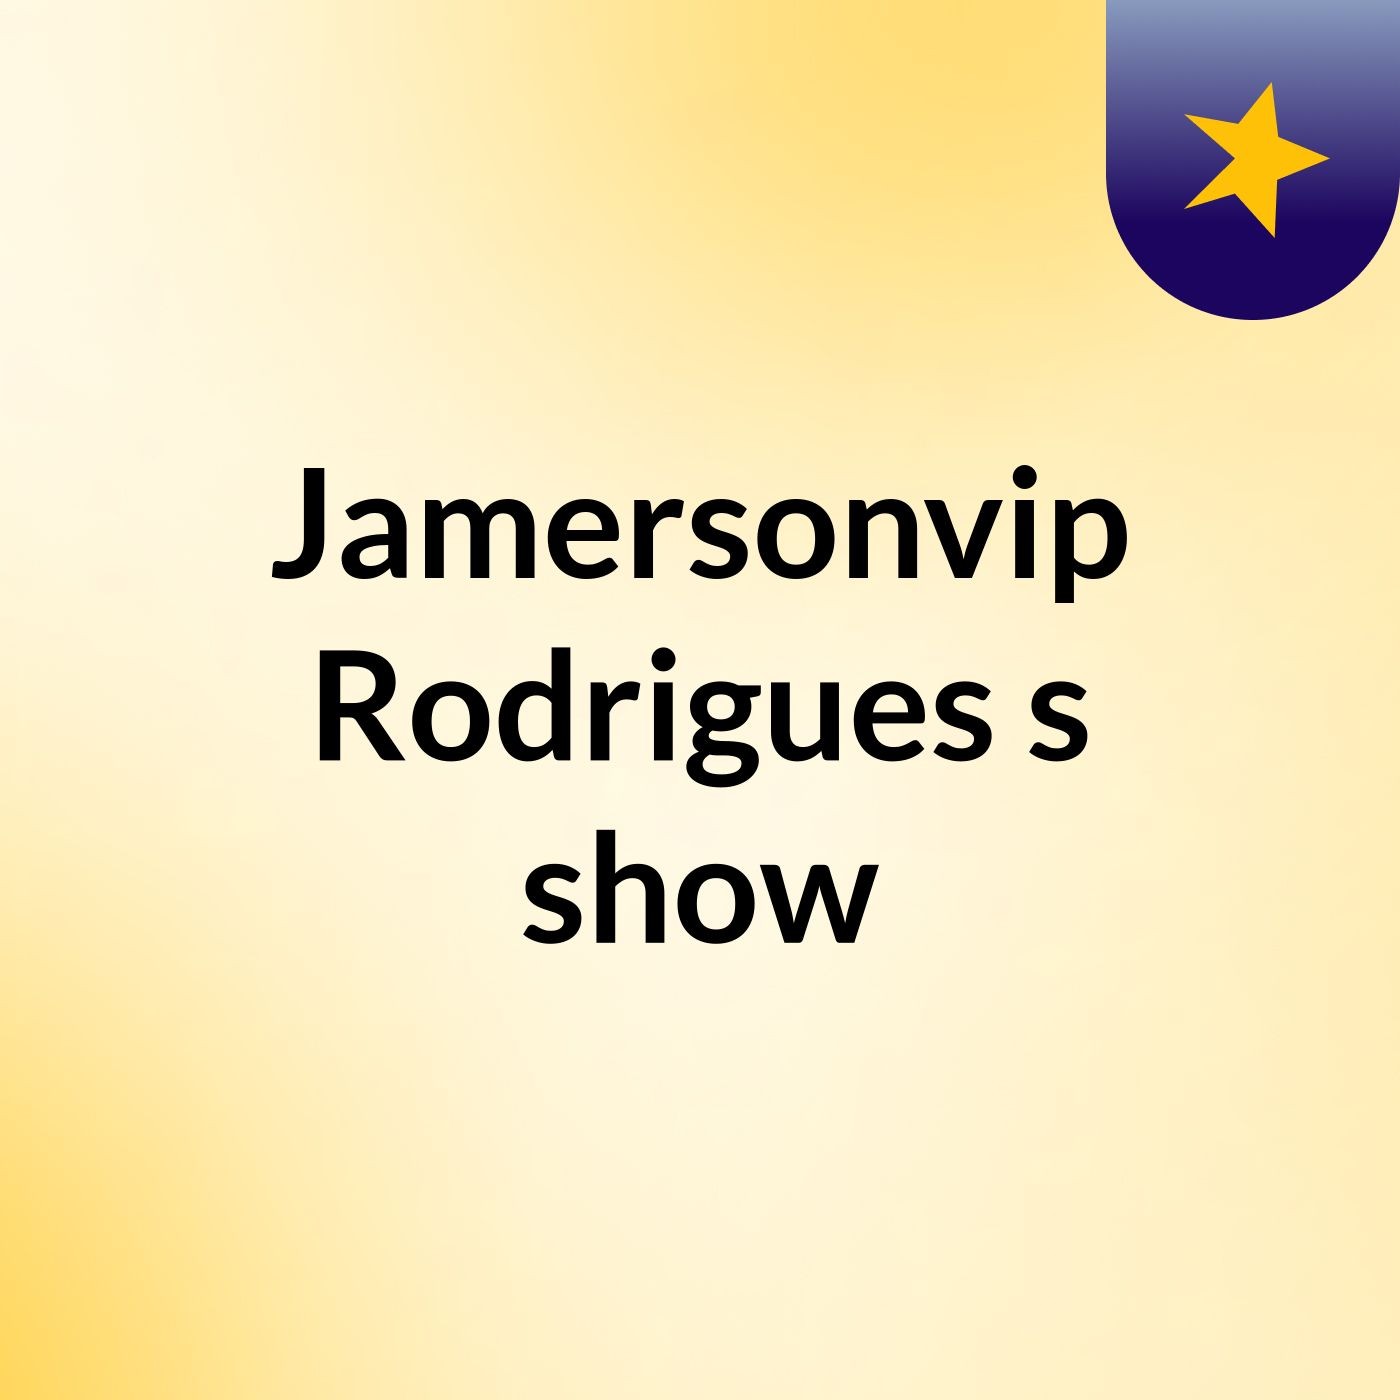 Jamersonvip Rodrigues's show